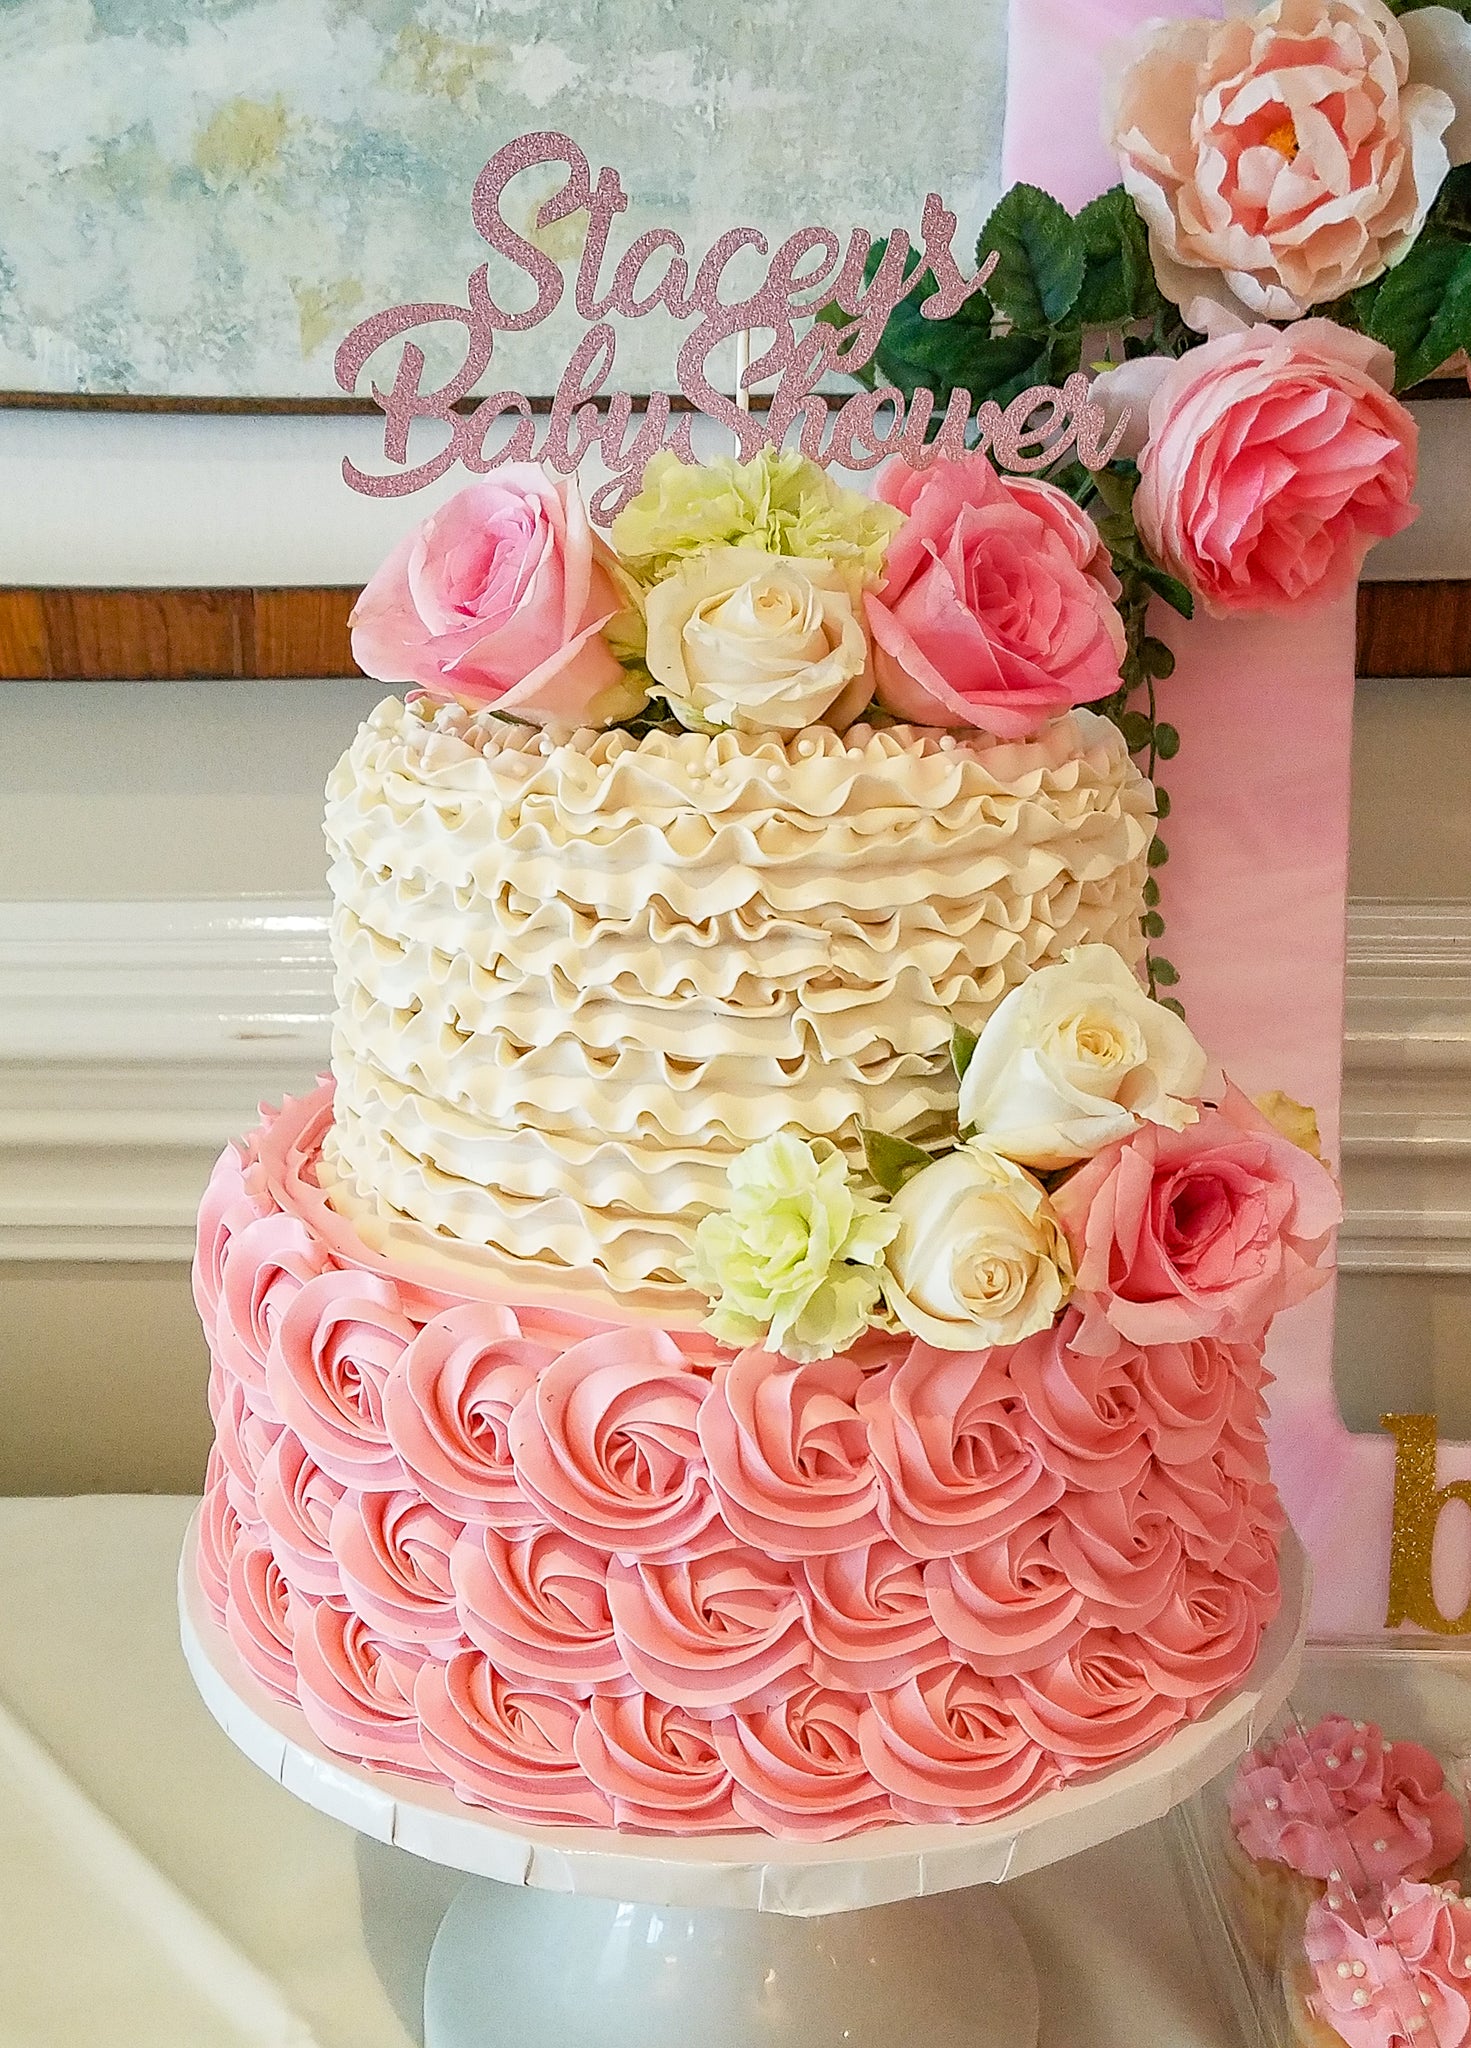 Online Wedding & Birthday Cakes | Toronto & Surrounding Cities GTA |  Irresistible Cakes